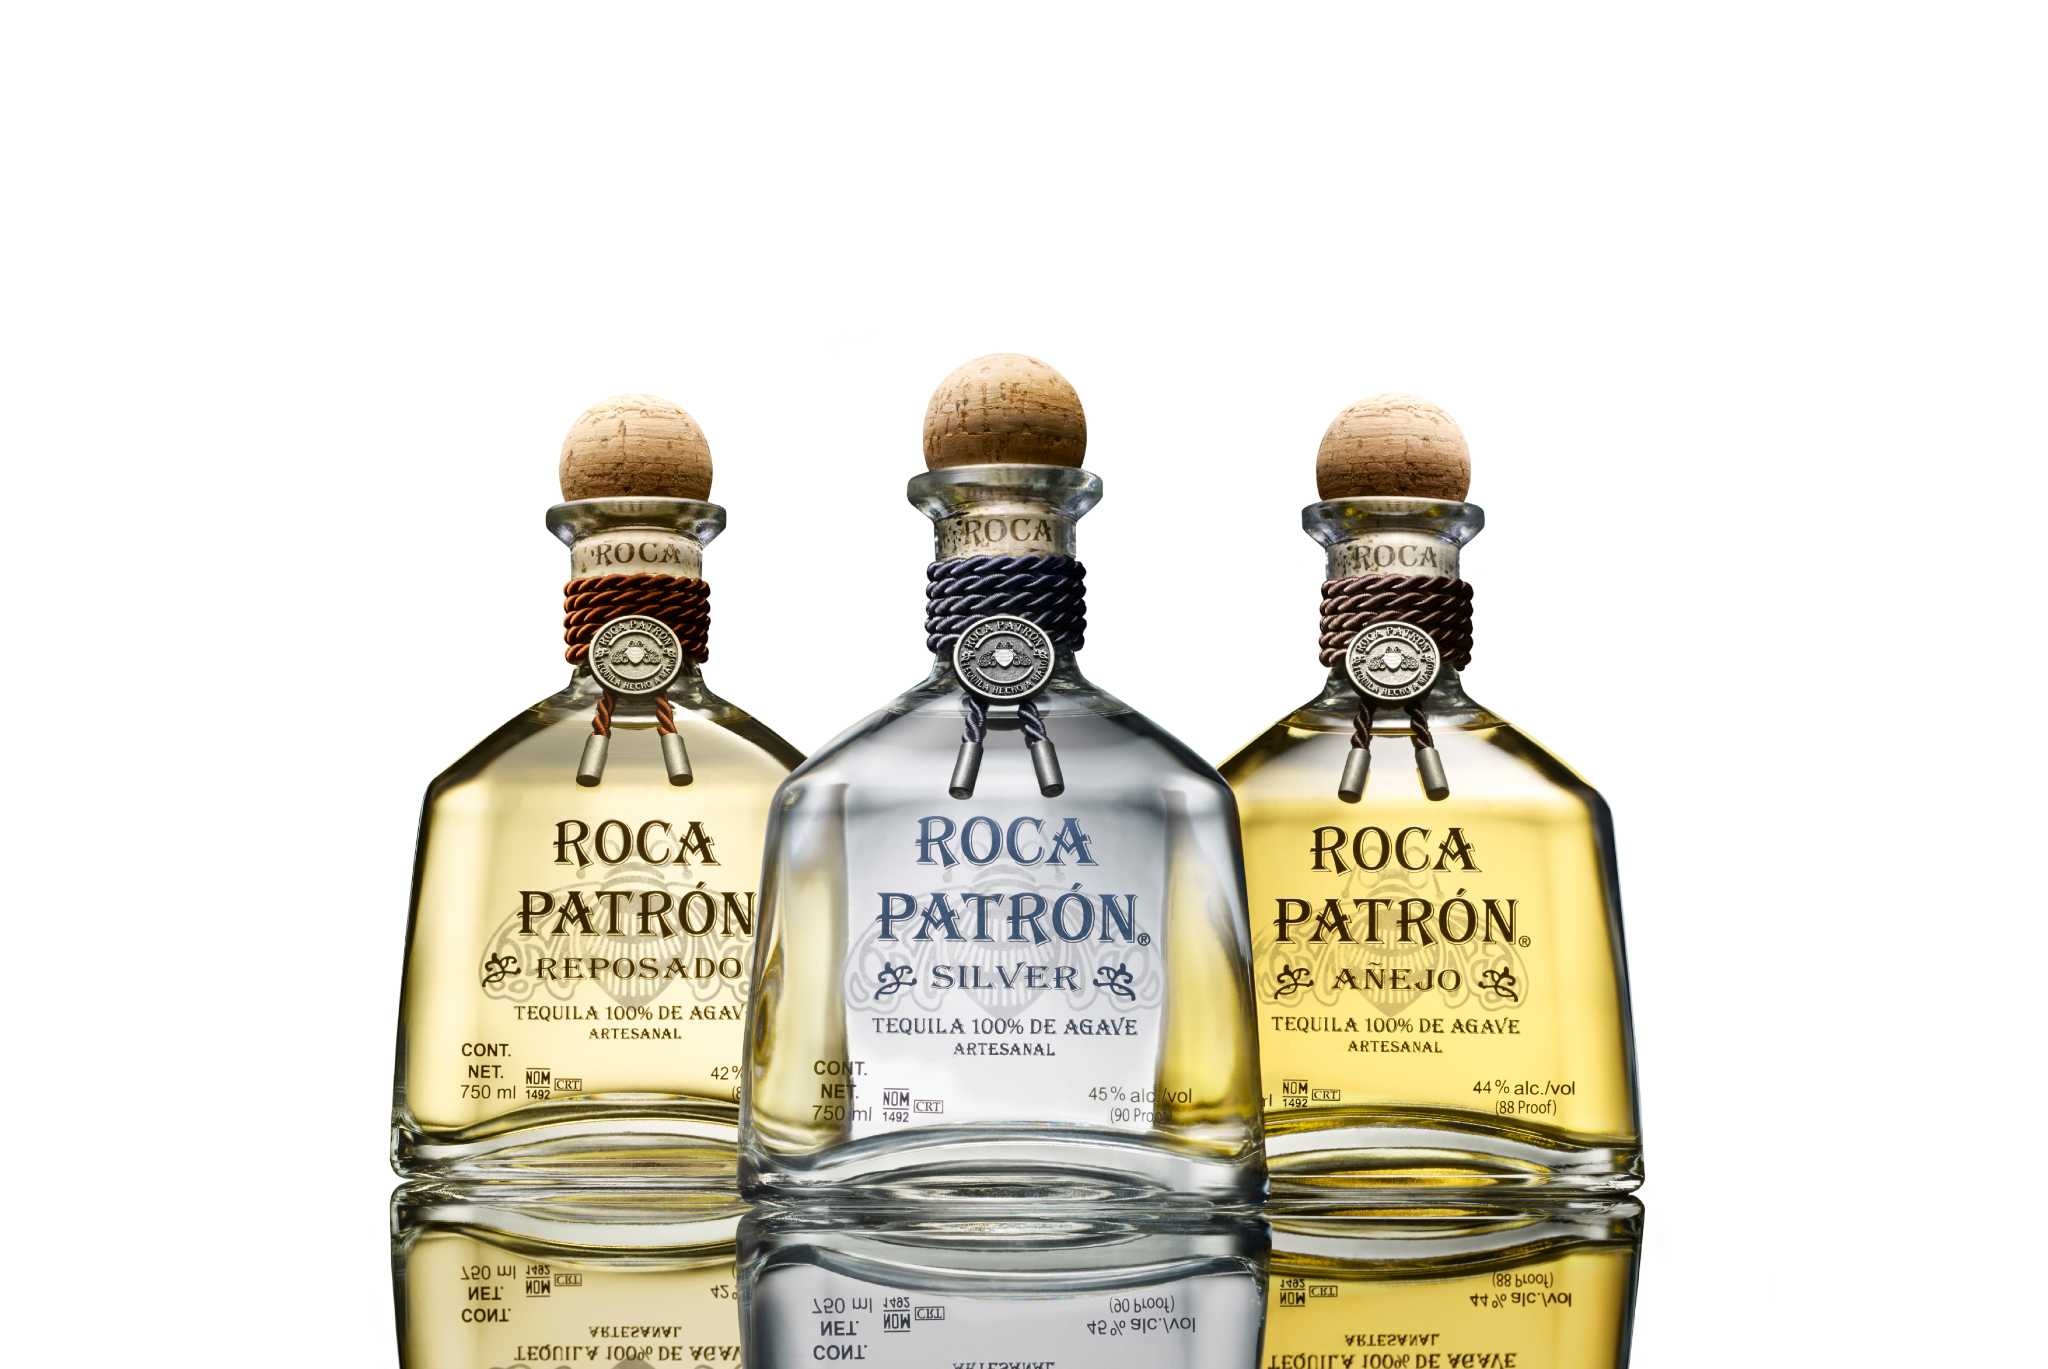 Patrón rocks its new, high-end tequila